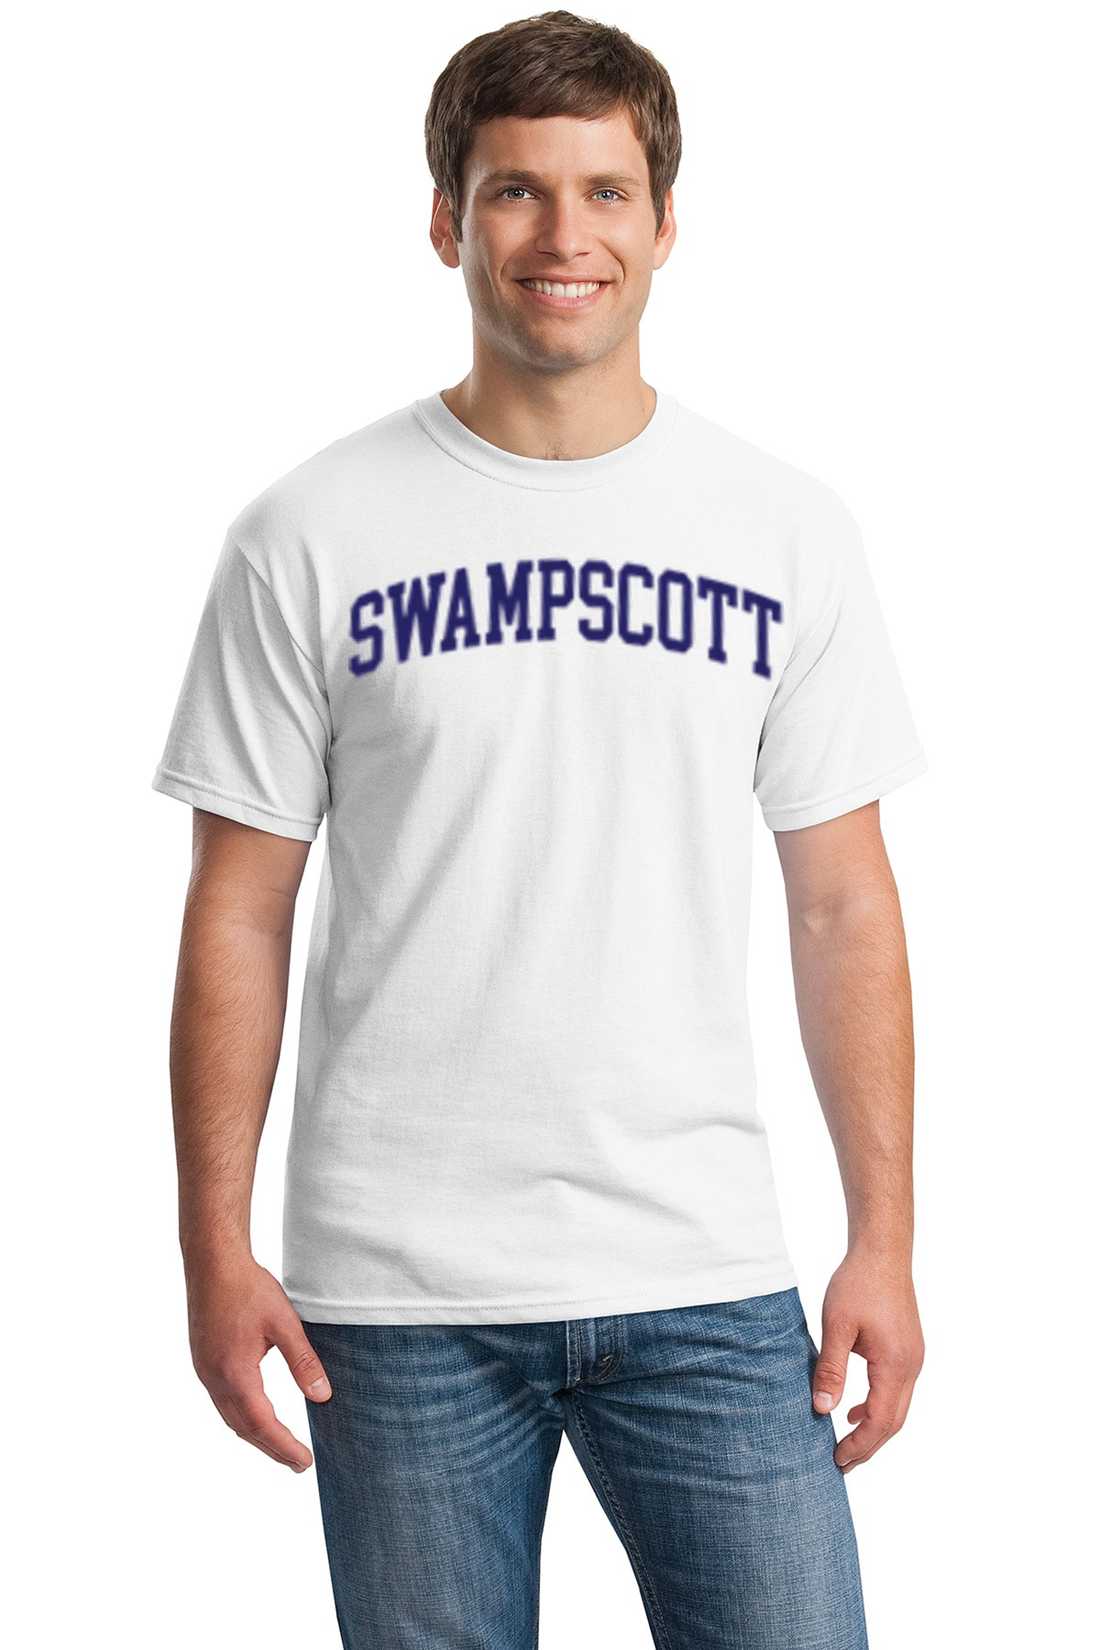 Powderpuff Swampscott T-Shirt